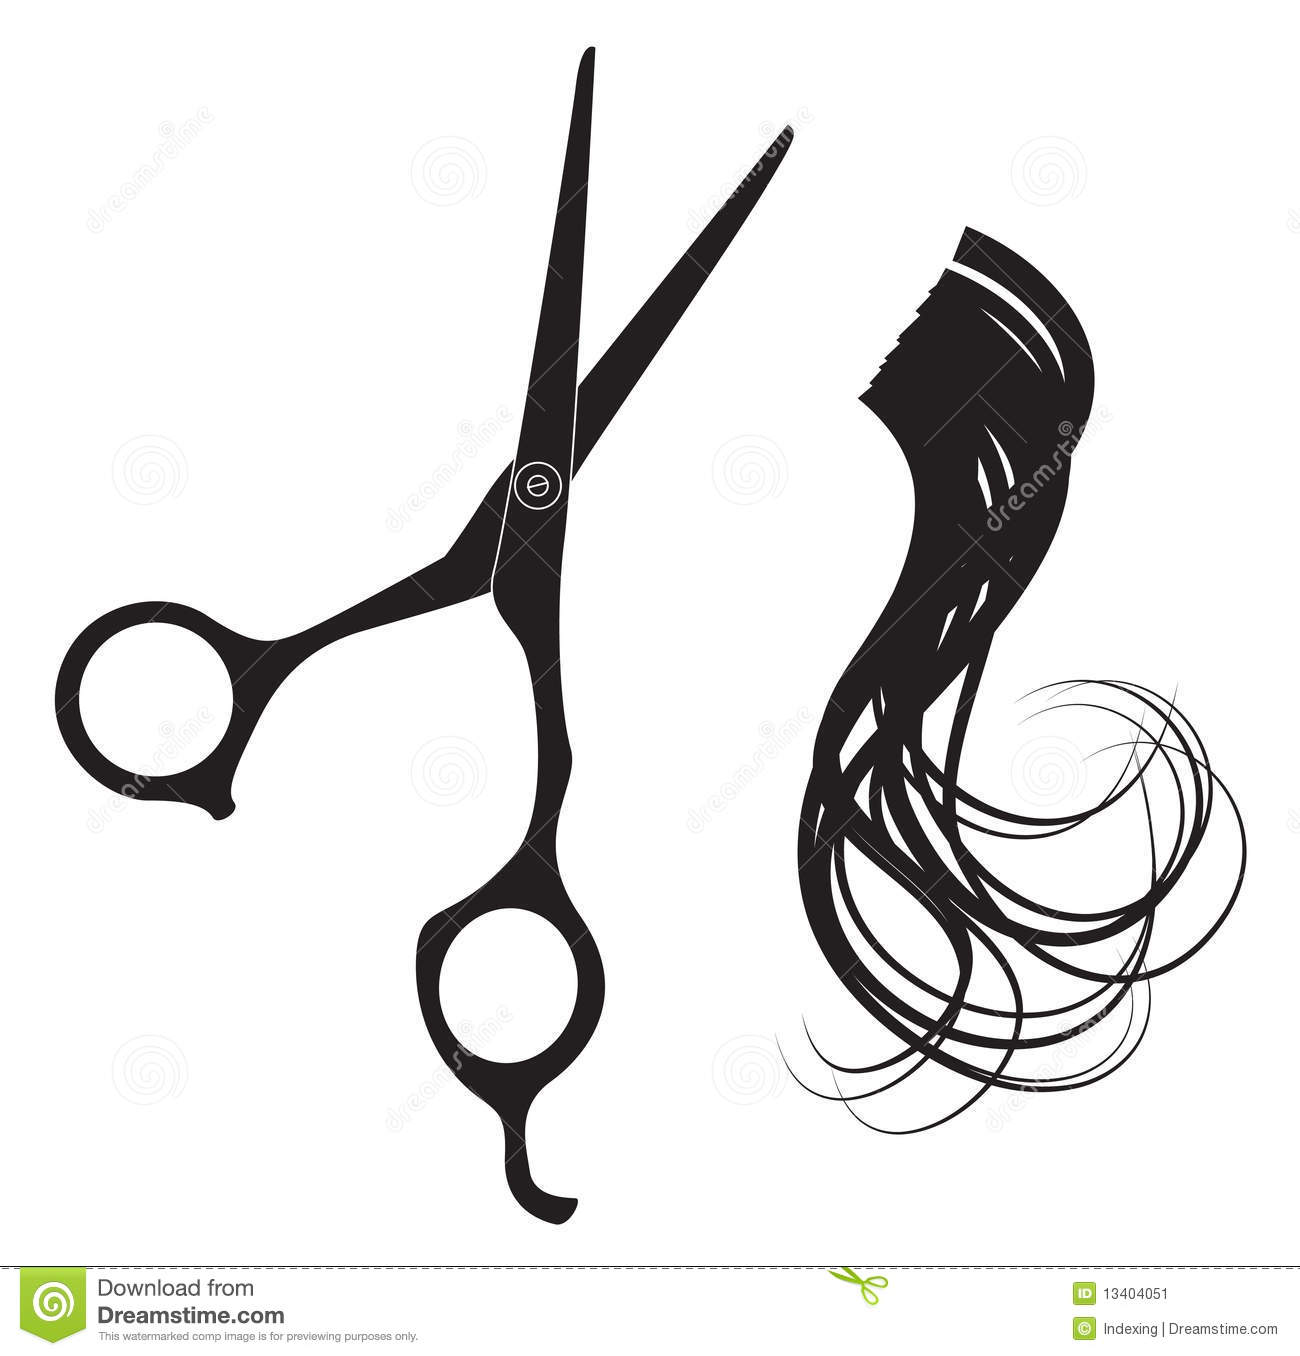 Lock Of Curly Hair Shingle Beauty Hair Design Mr No Pr No 5 21601 61